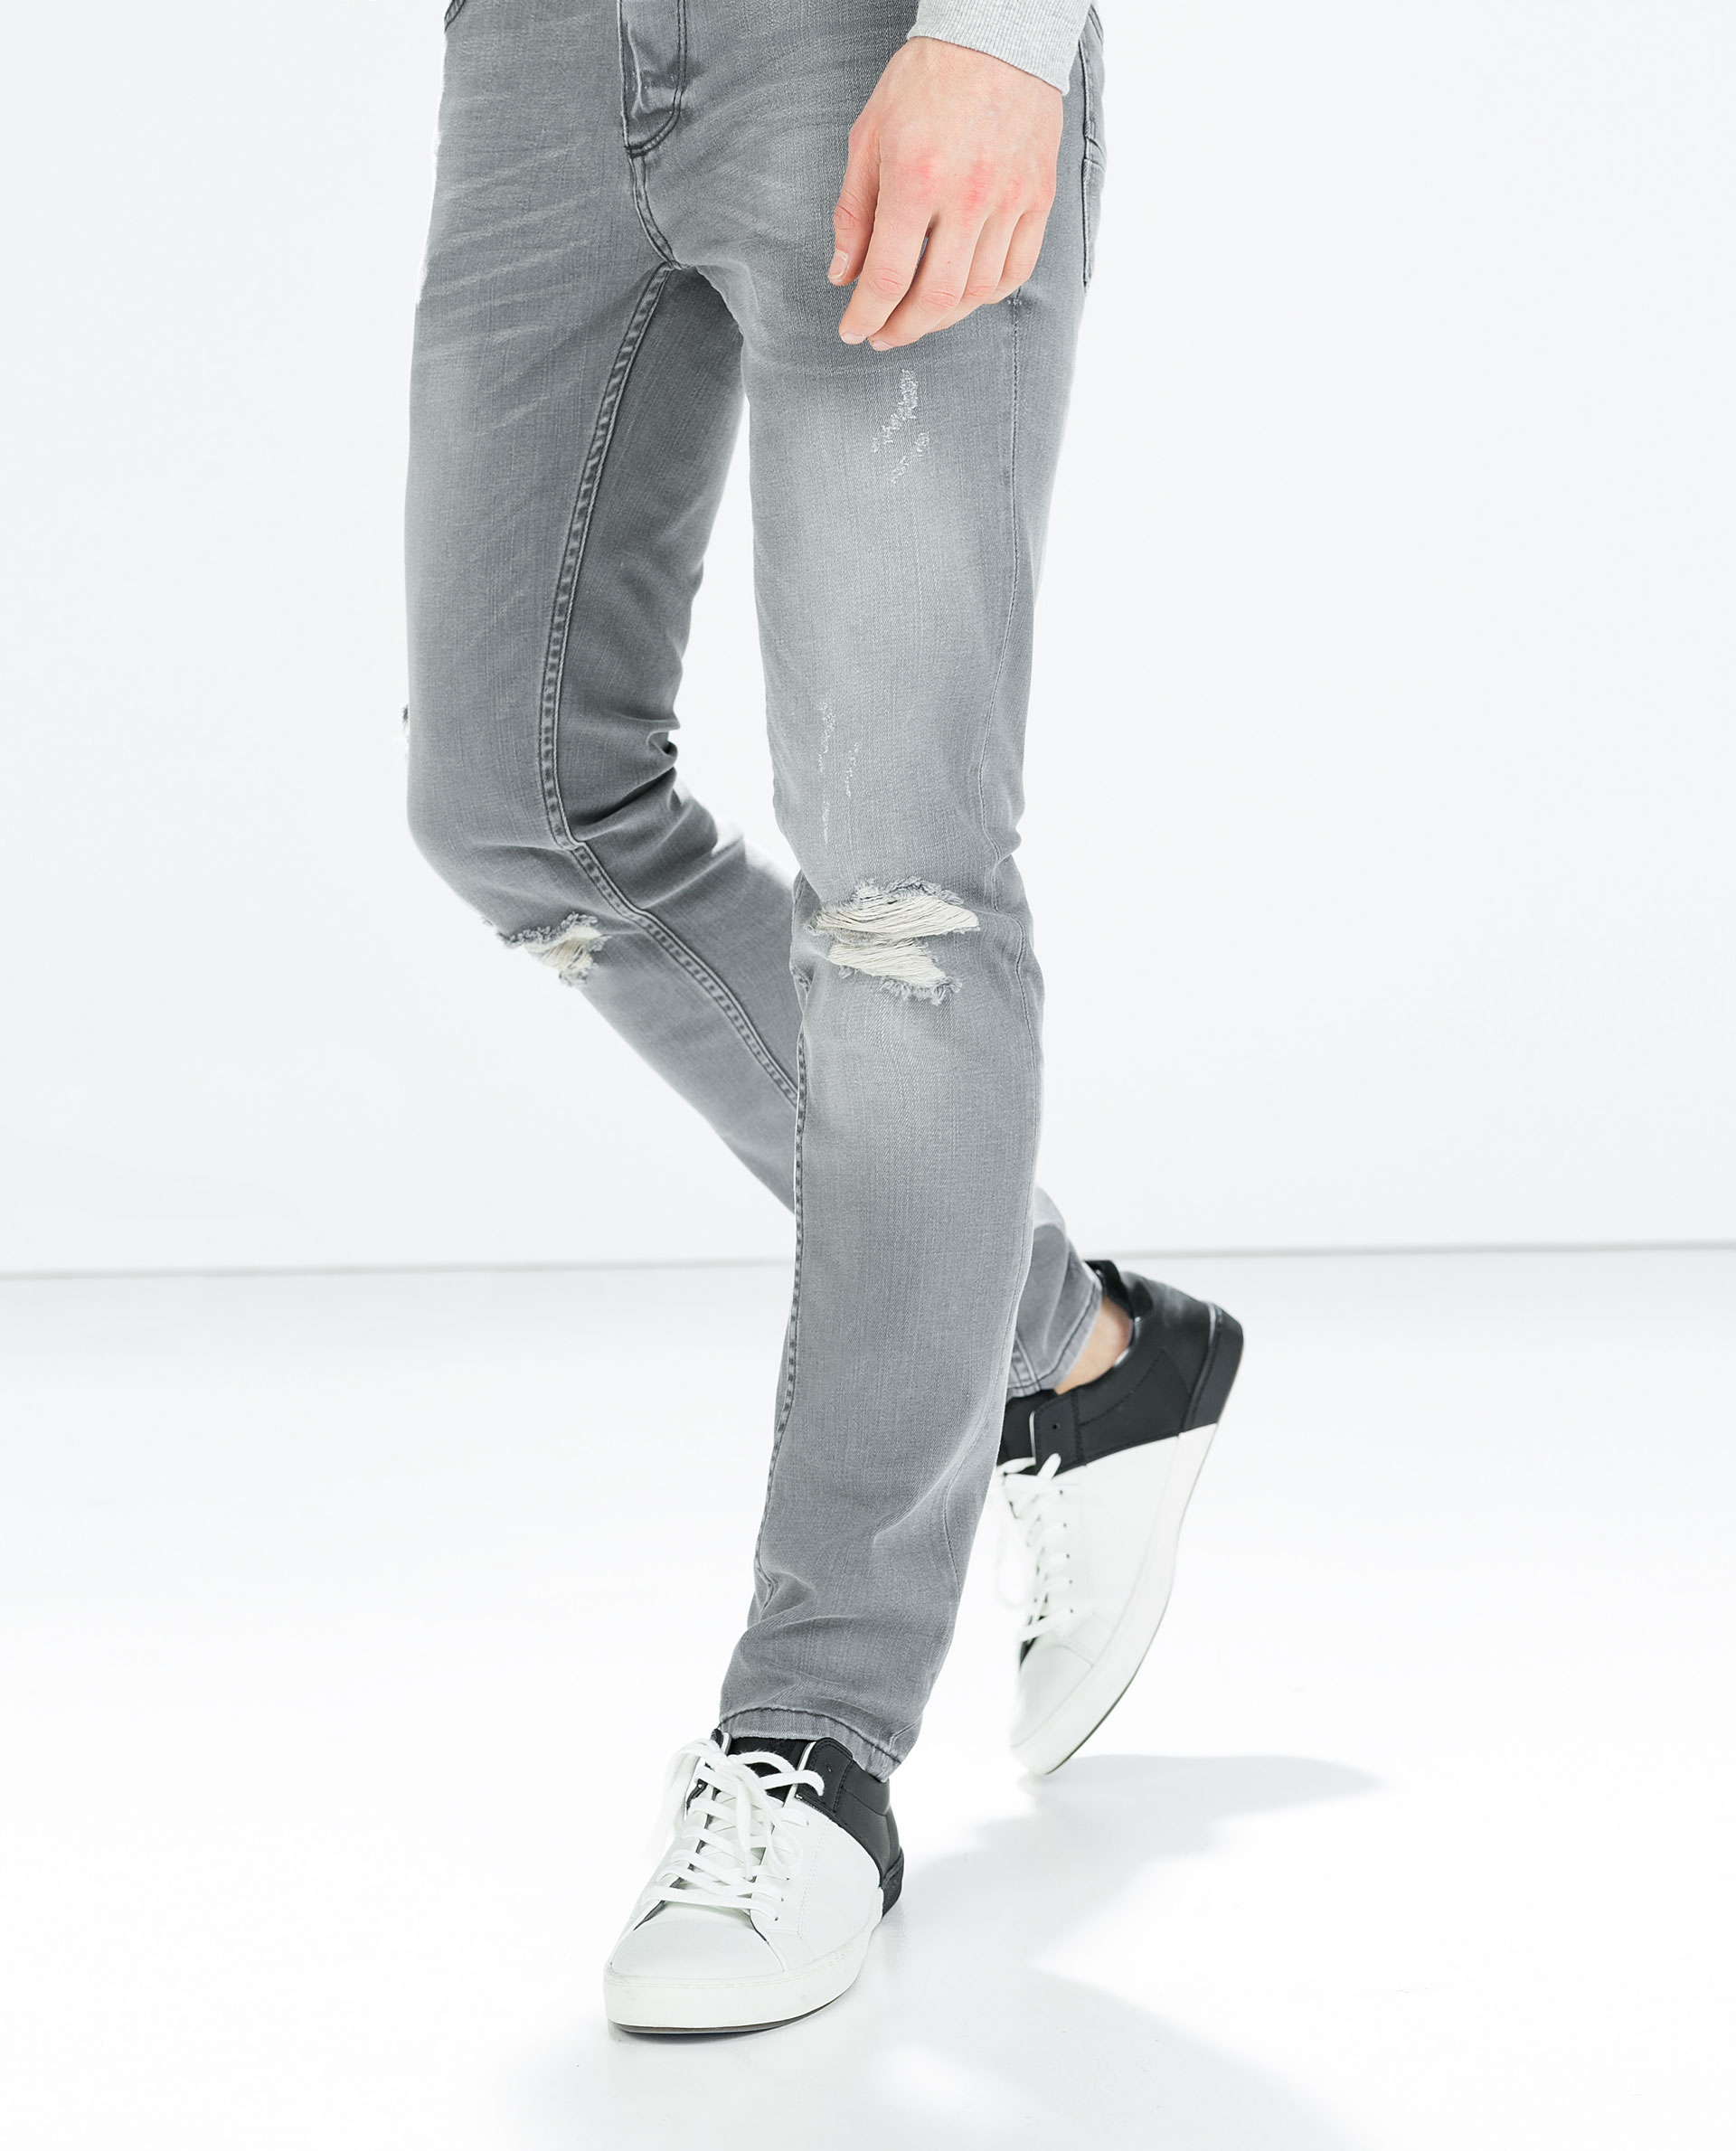 Zara slim fit jeans men review company